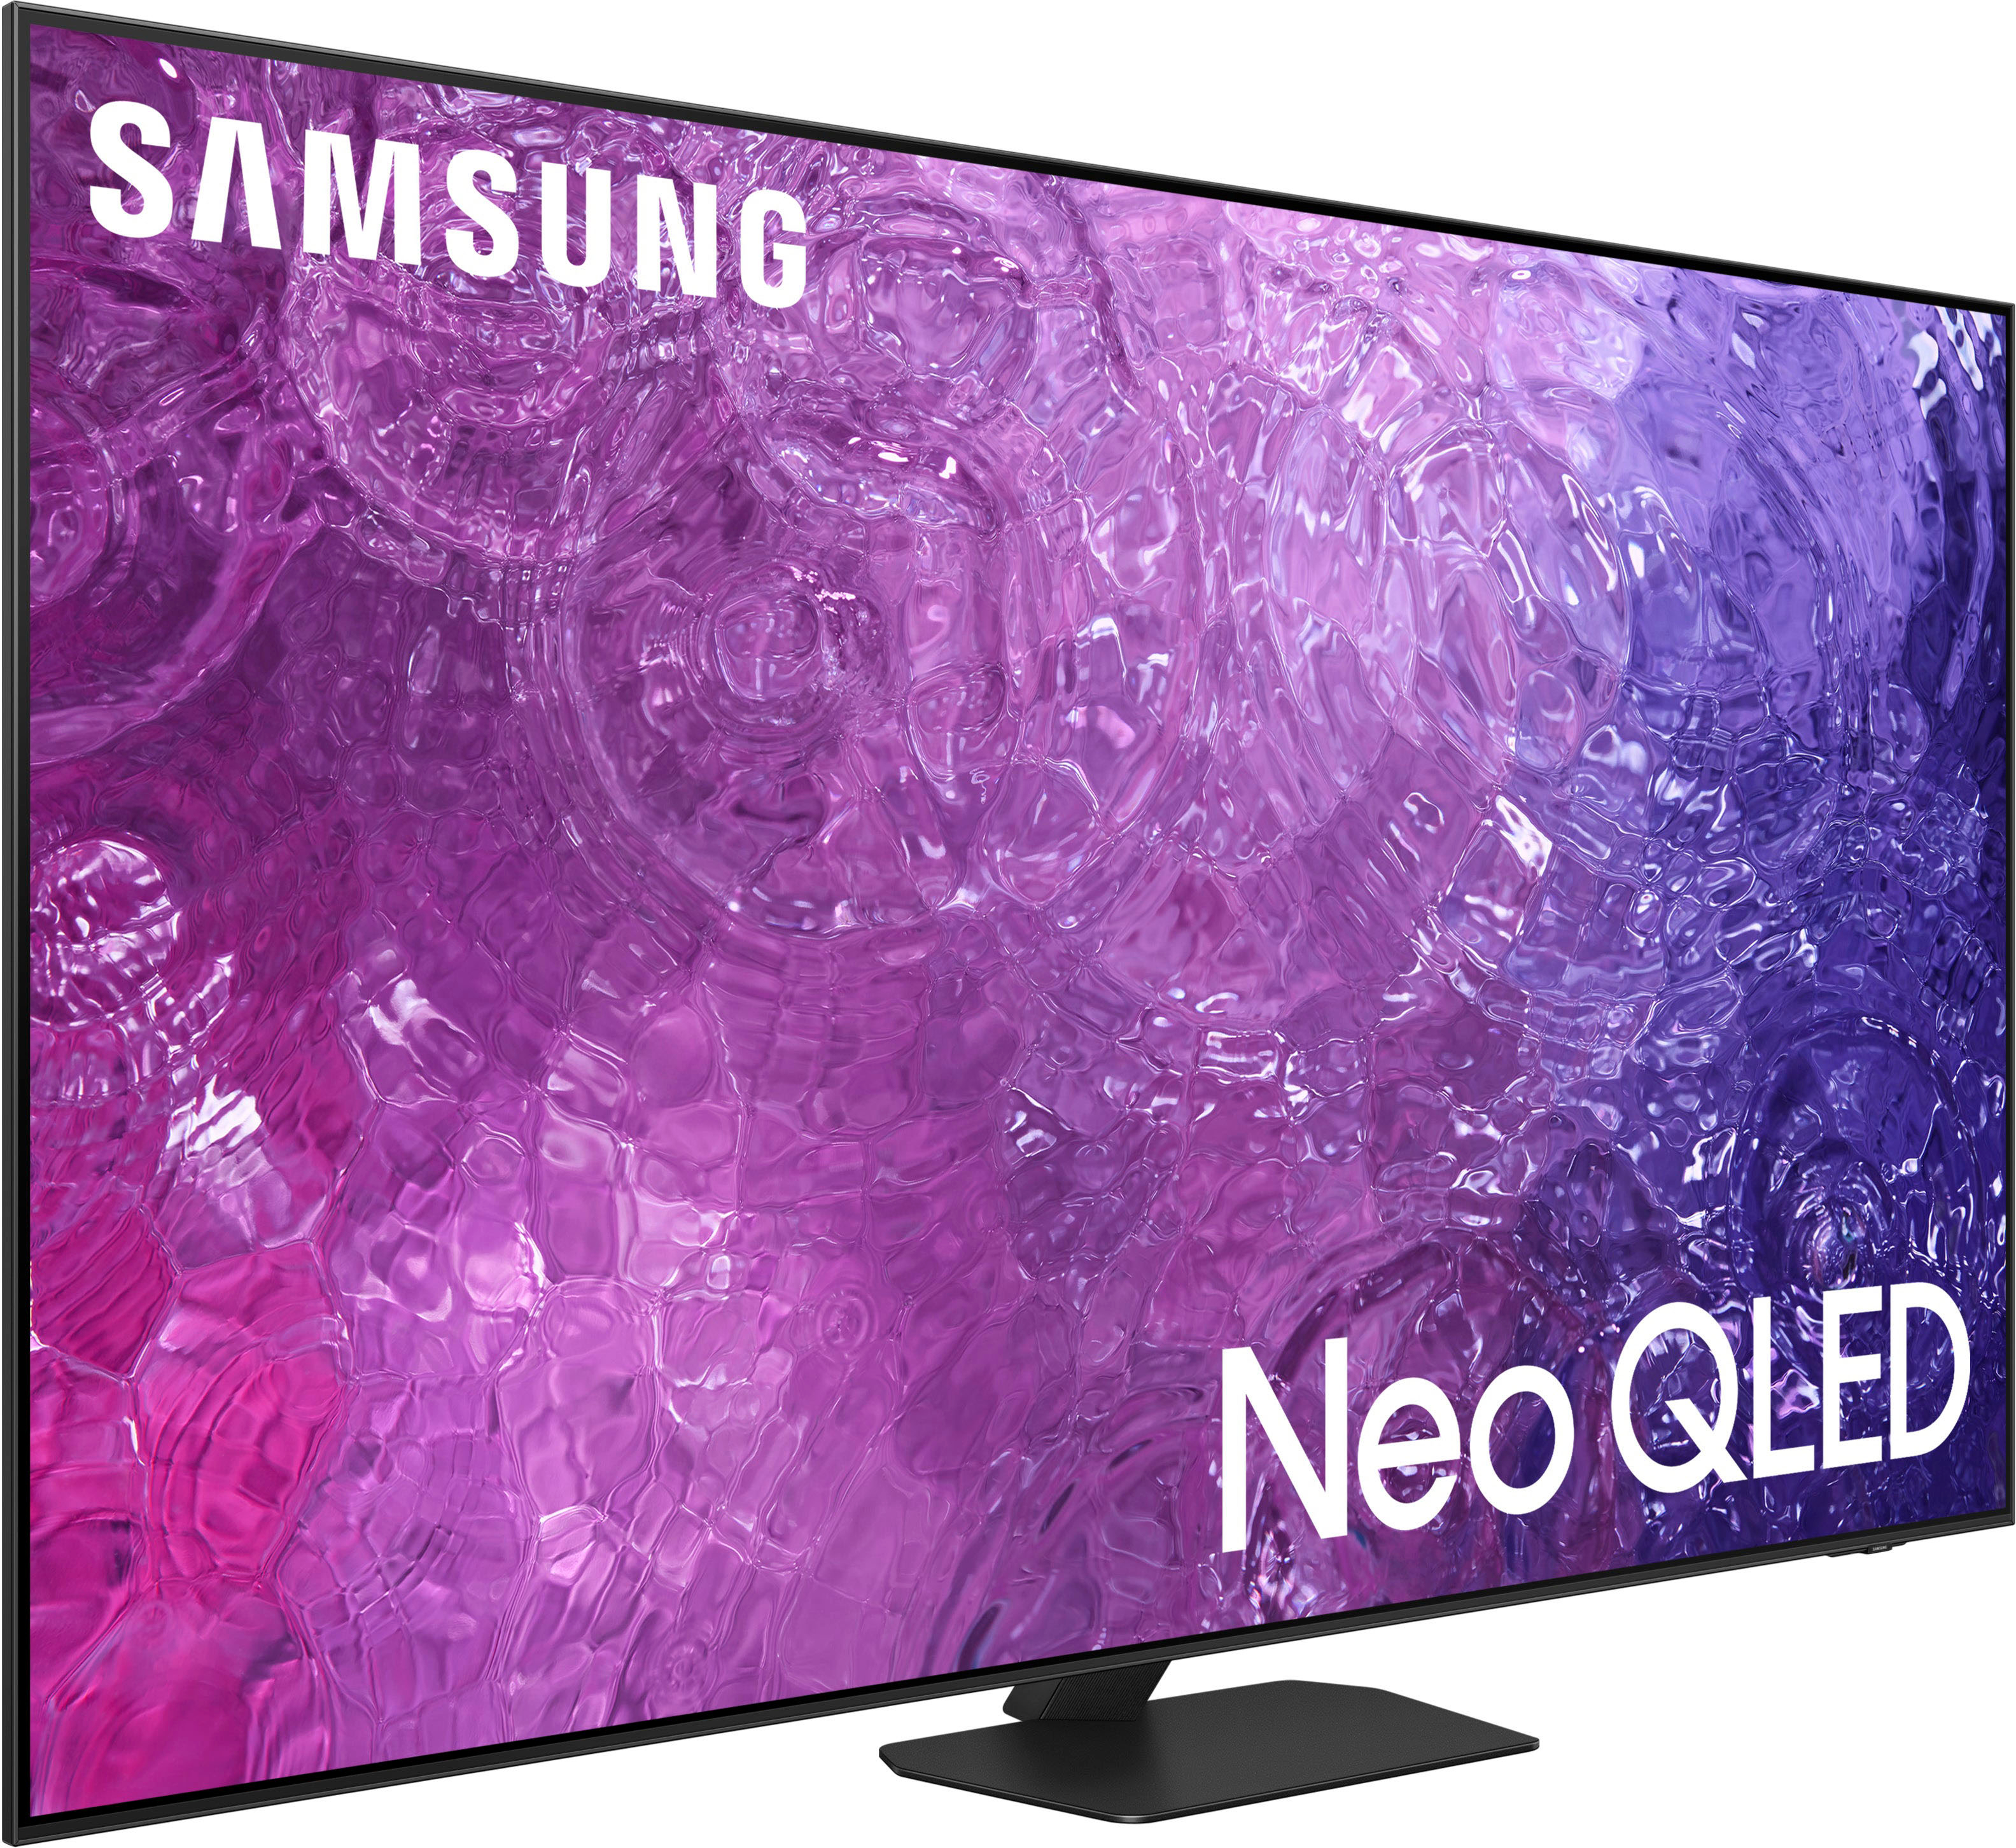 TV] Samsung - 55 Class QN700B Neo QLED 8K Smart TV - $999.99 ($1999.99 -  $1000) : r/buildapcsales